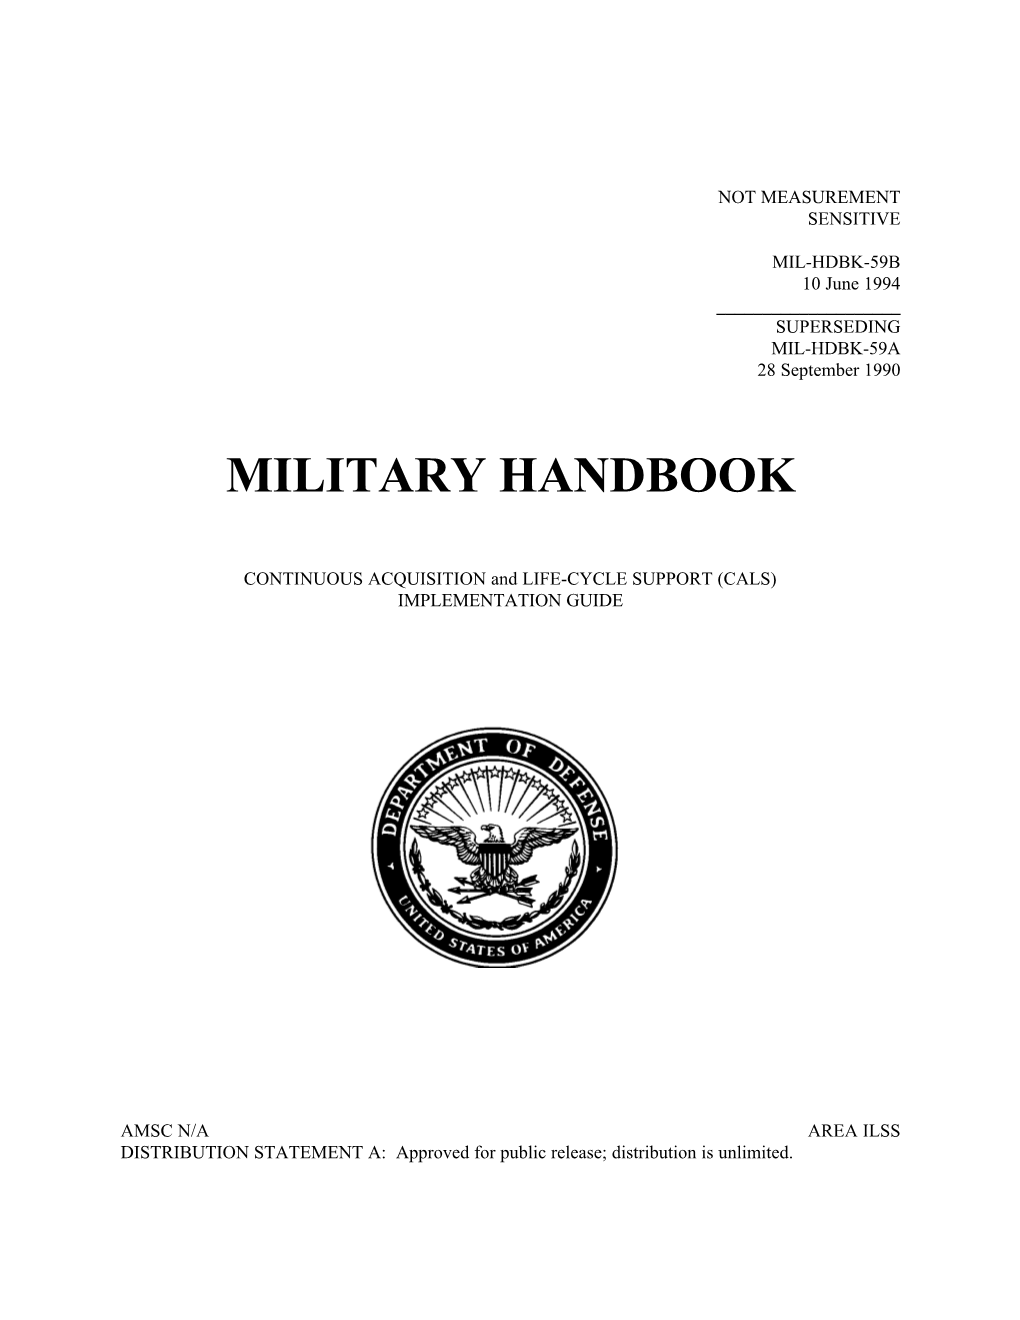 Military Handbook